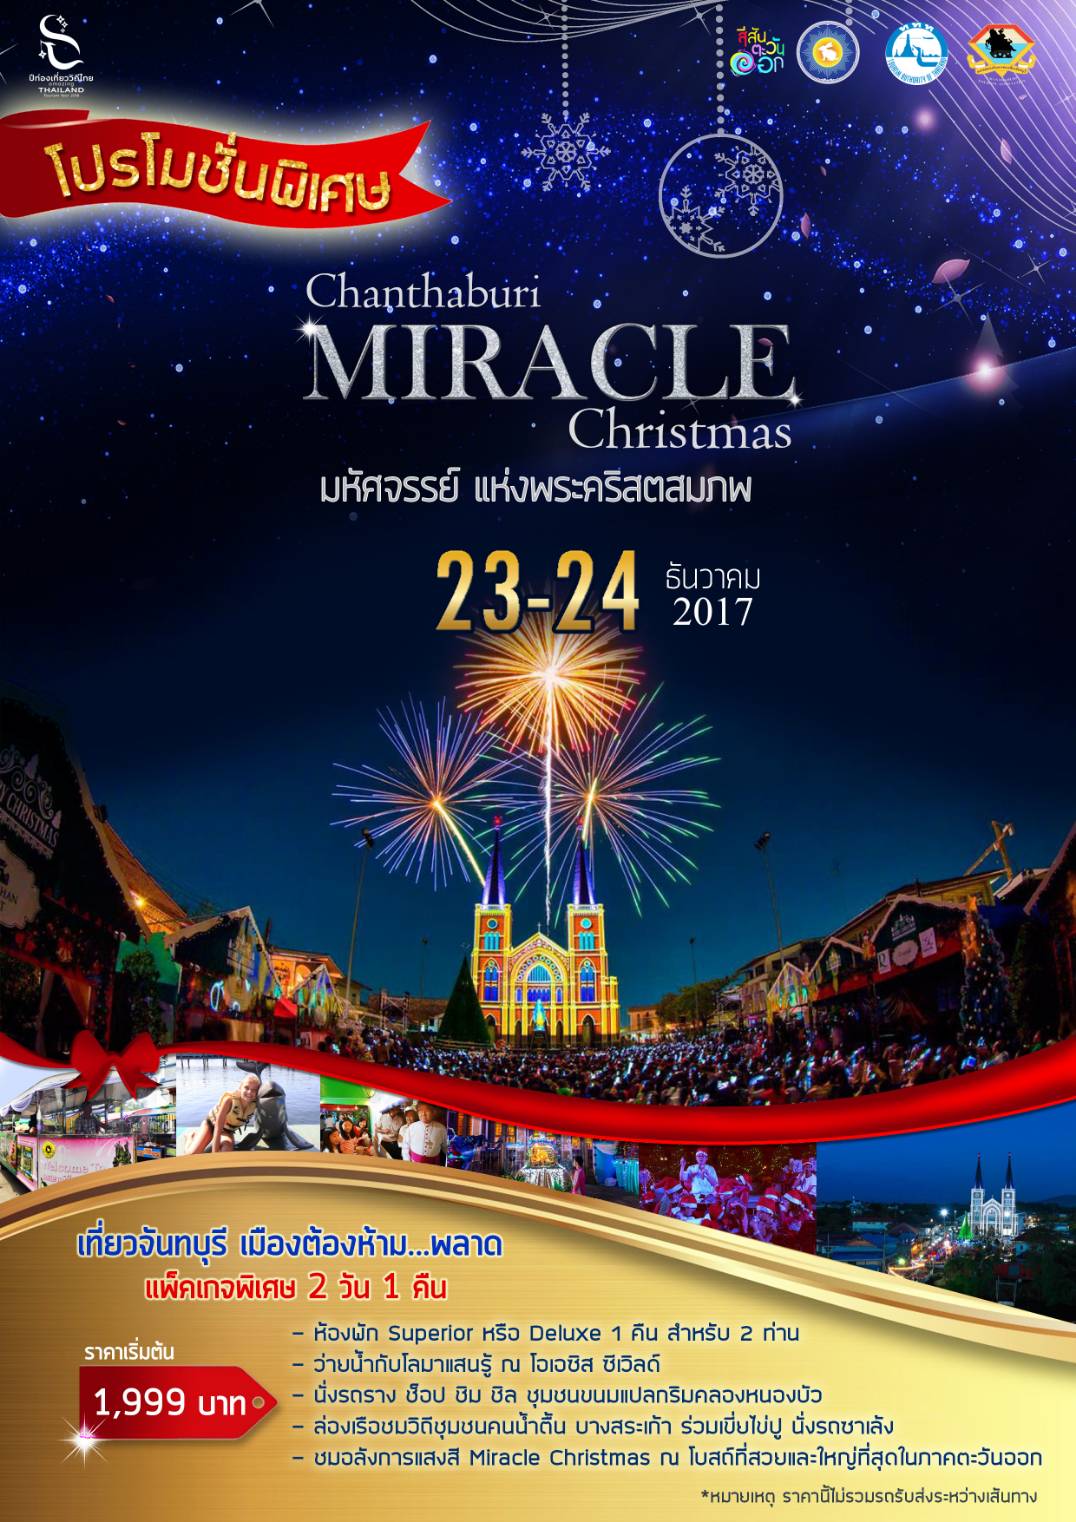 Chantaburi Miracle Christmas มหัศจรรย์แห่งพระคริสตสมภพ 2017